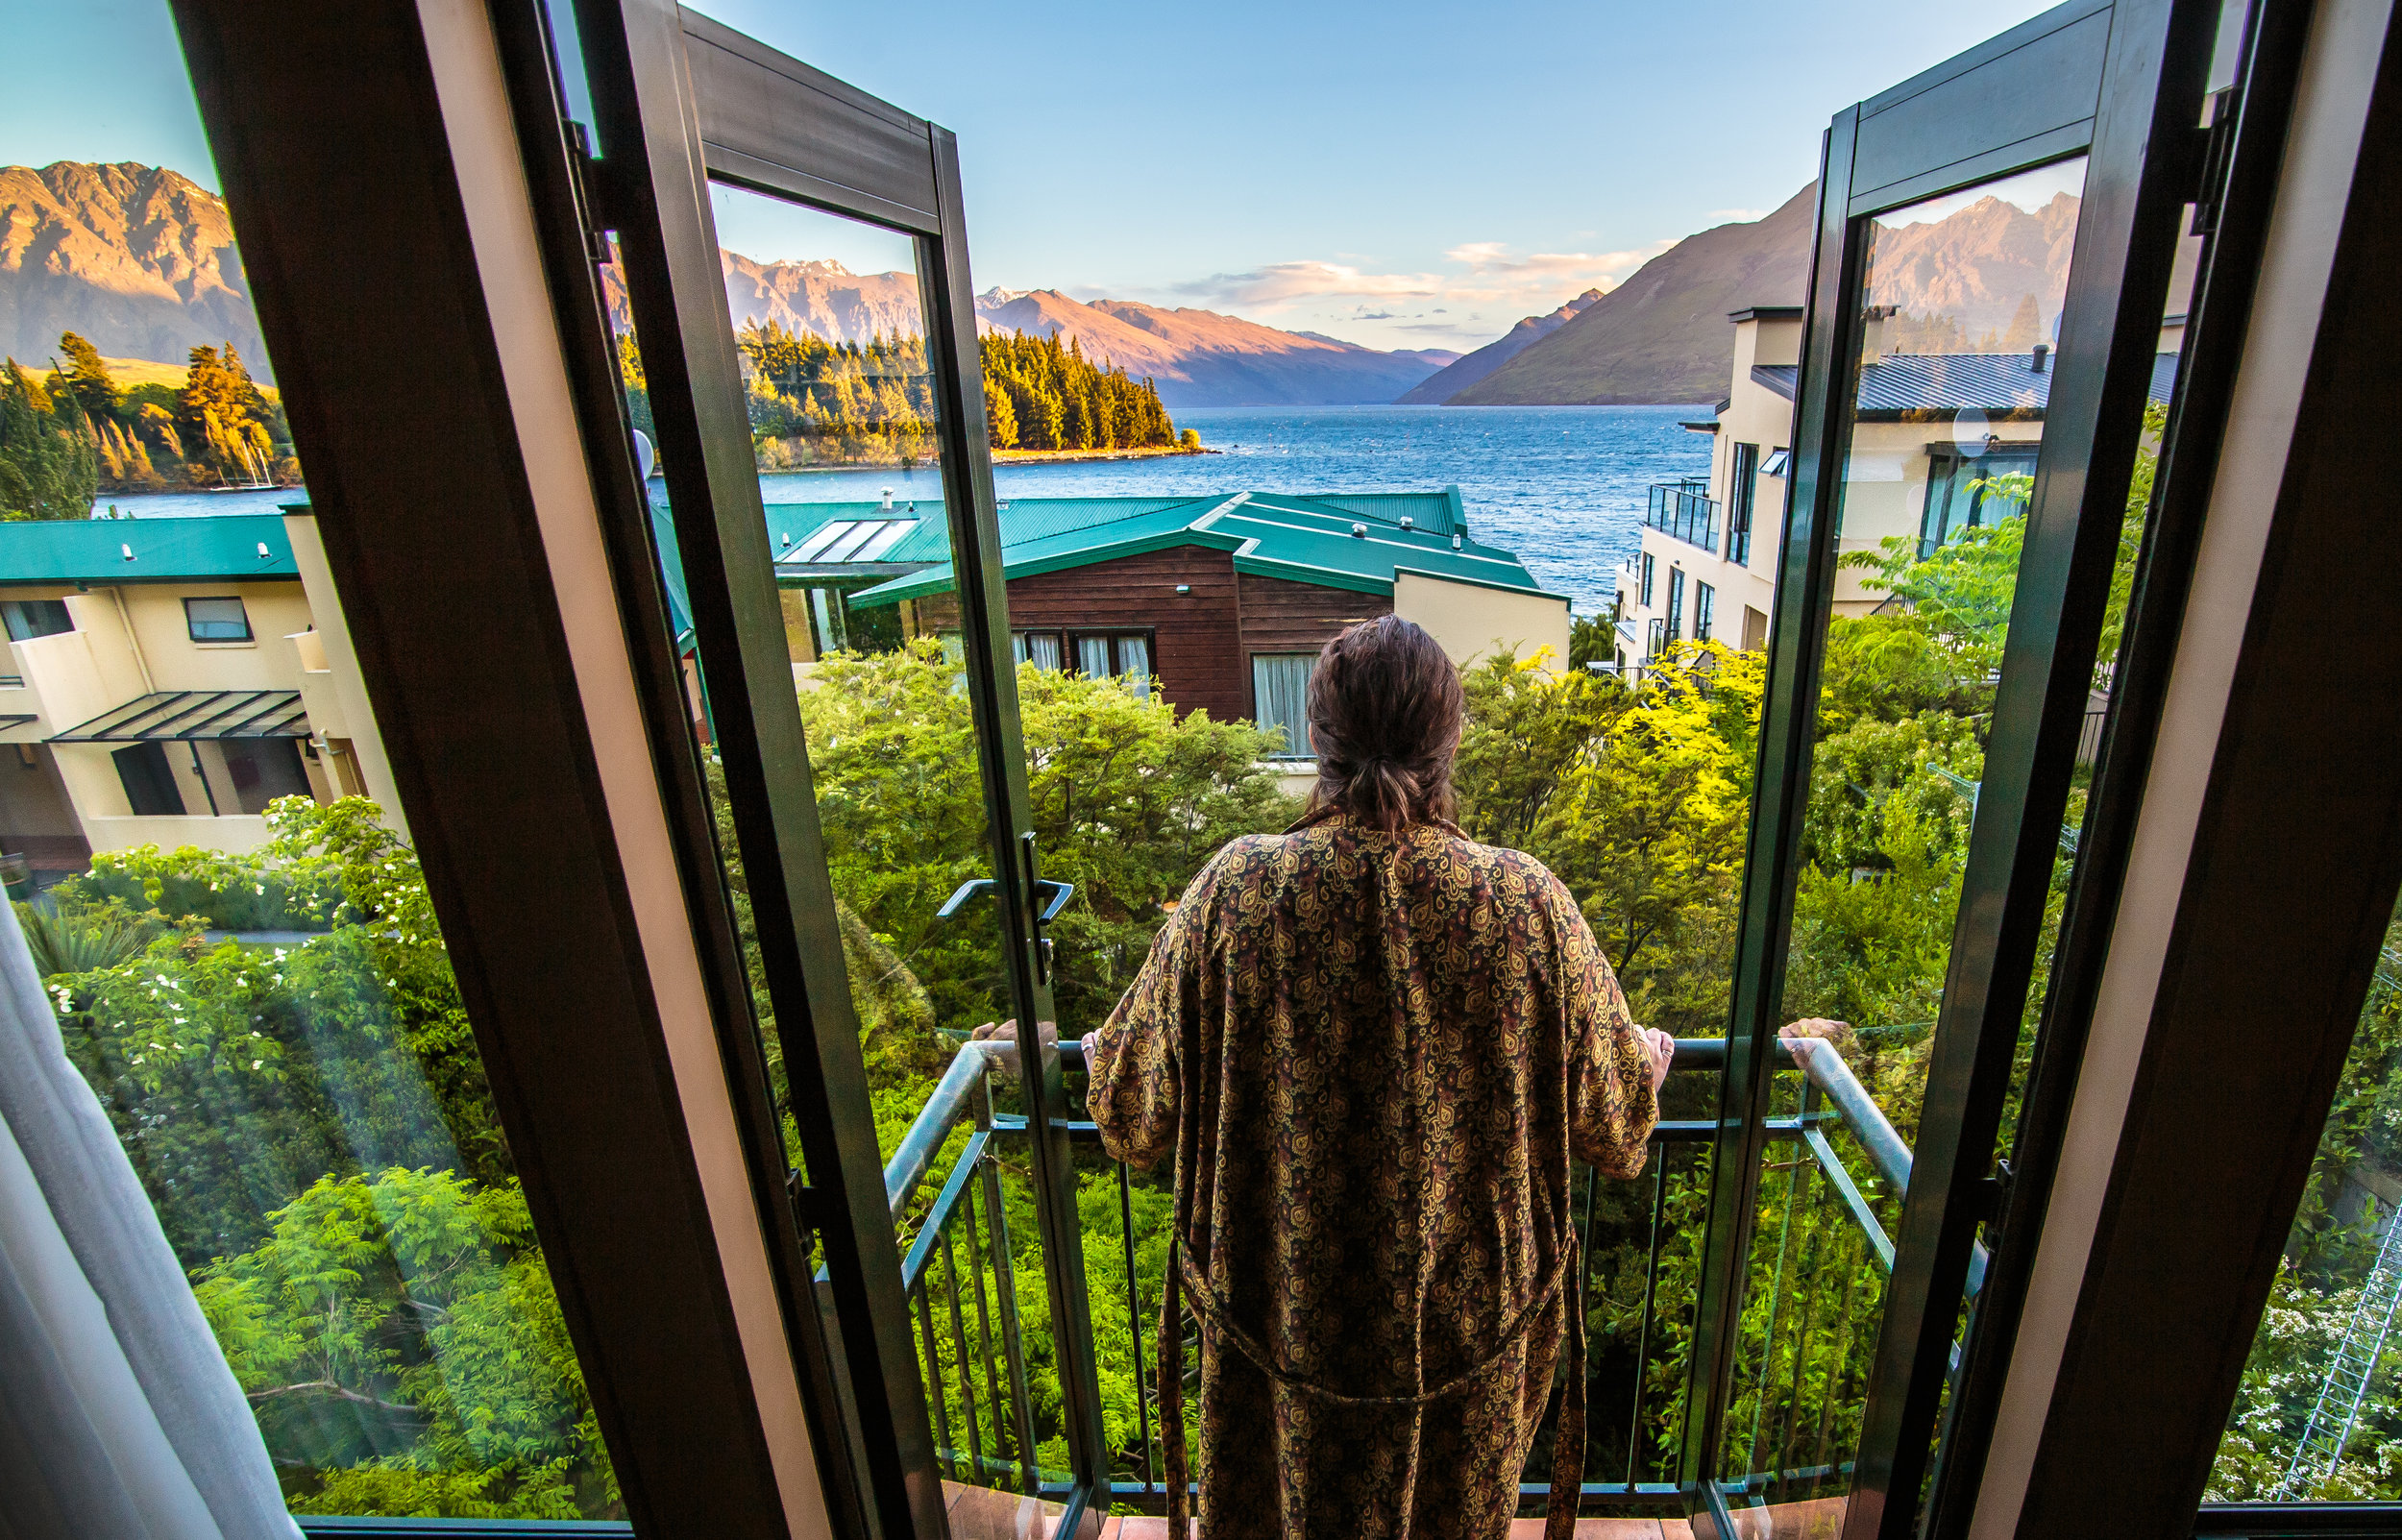 The view from the balcony of Lake Wakatipu